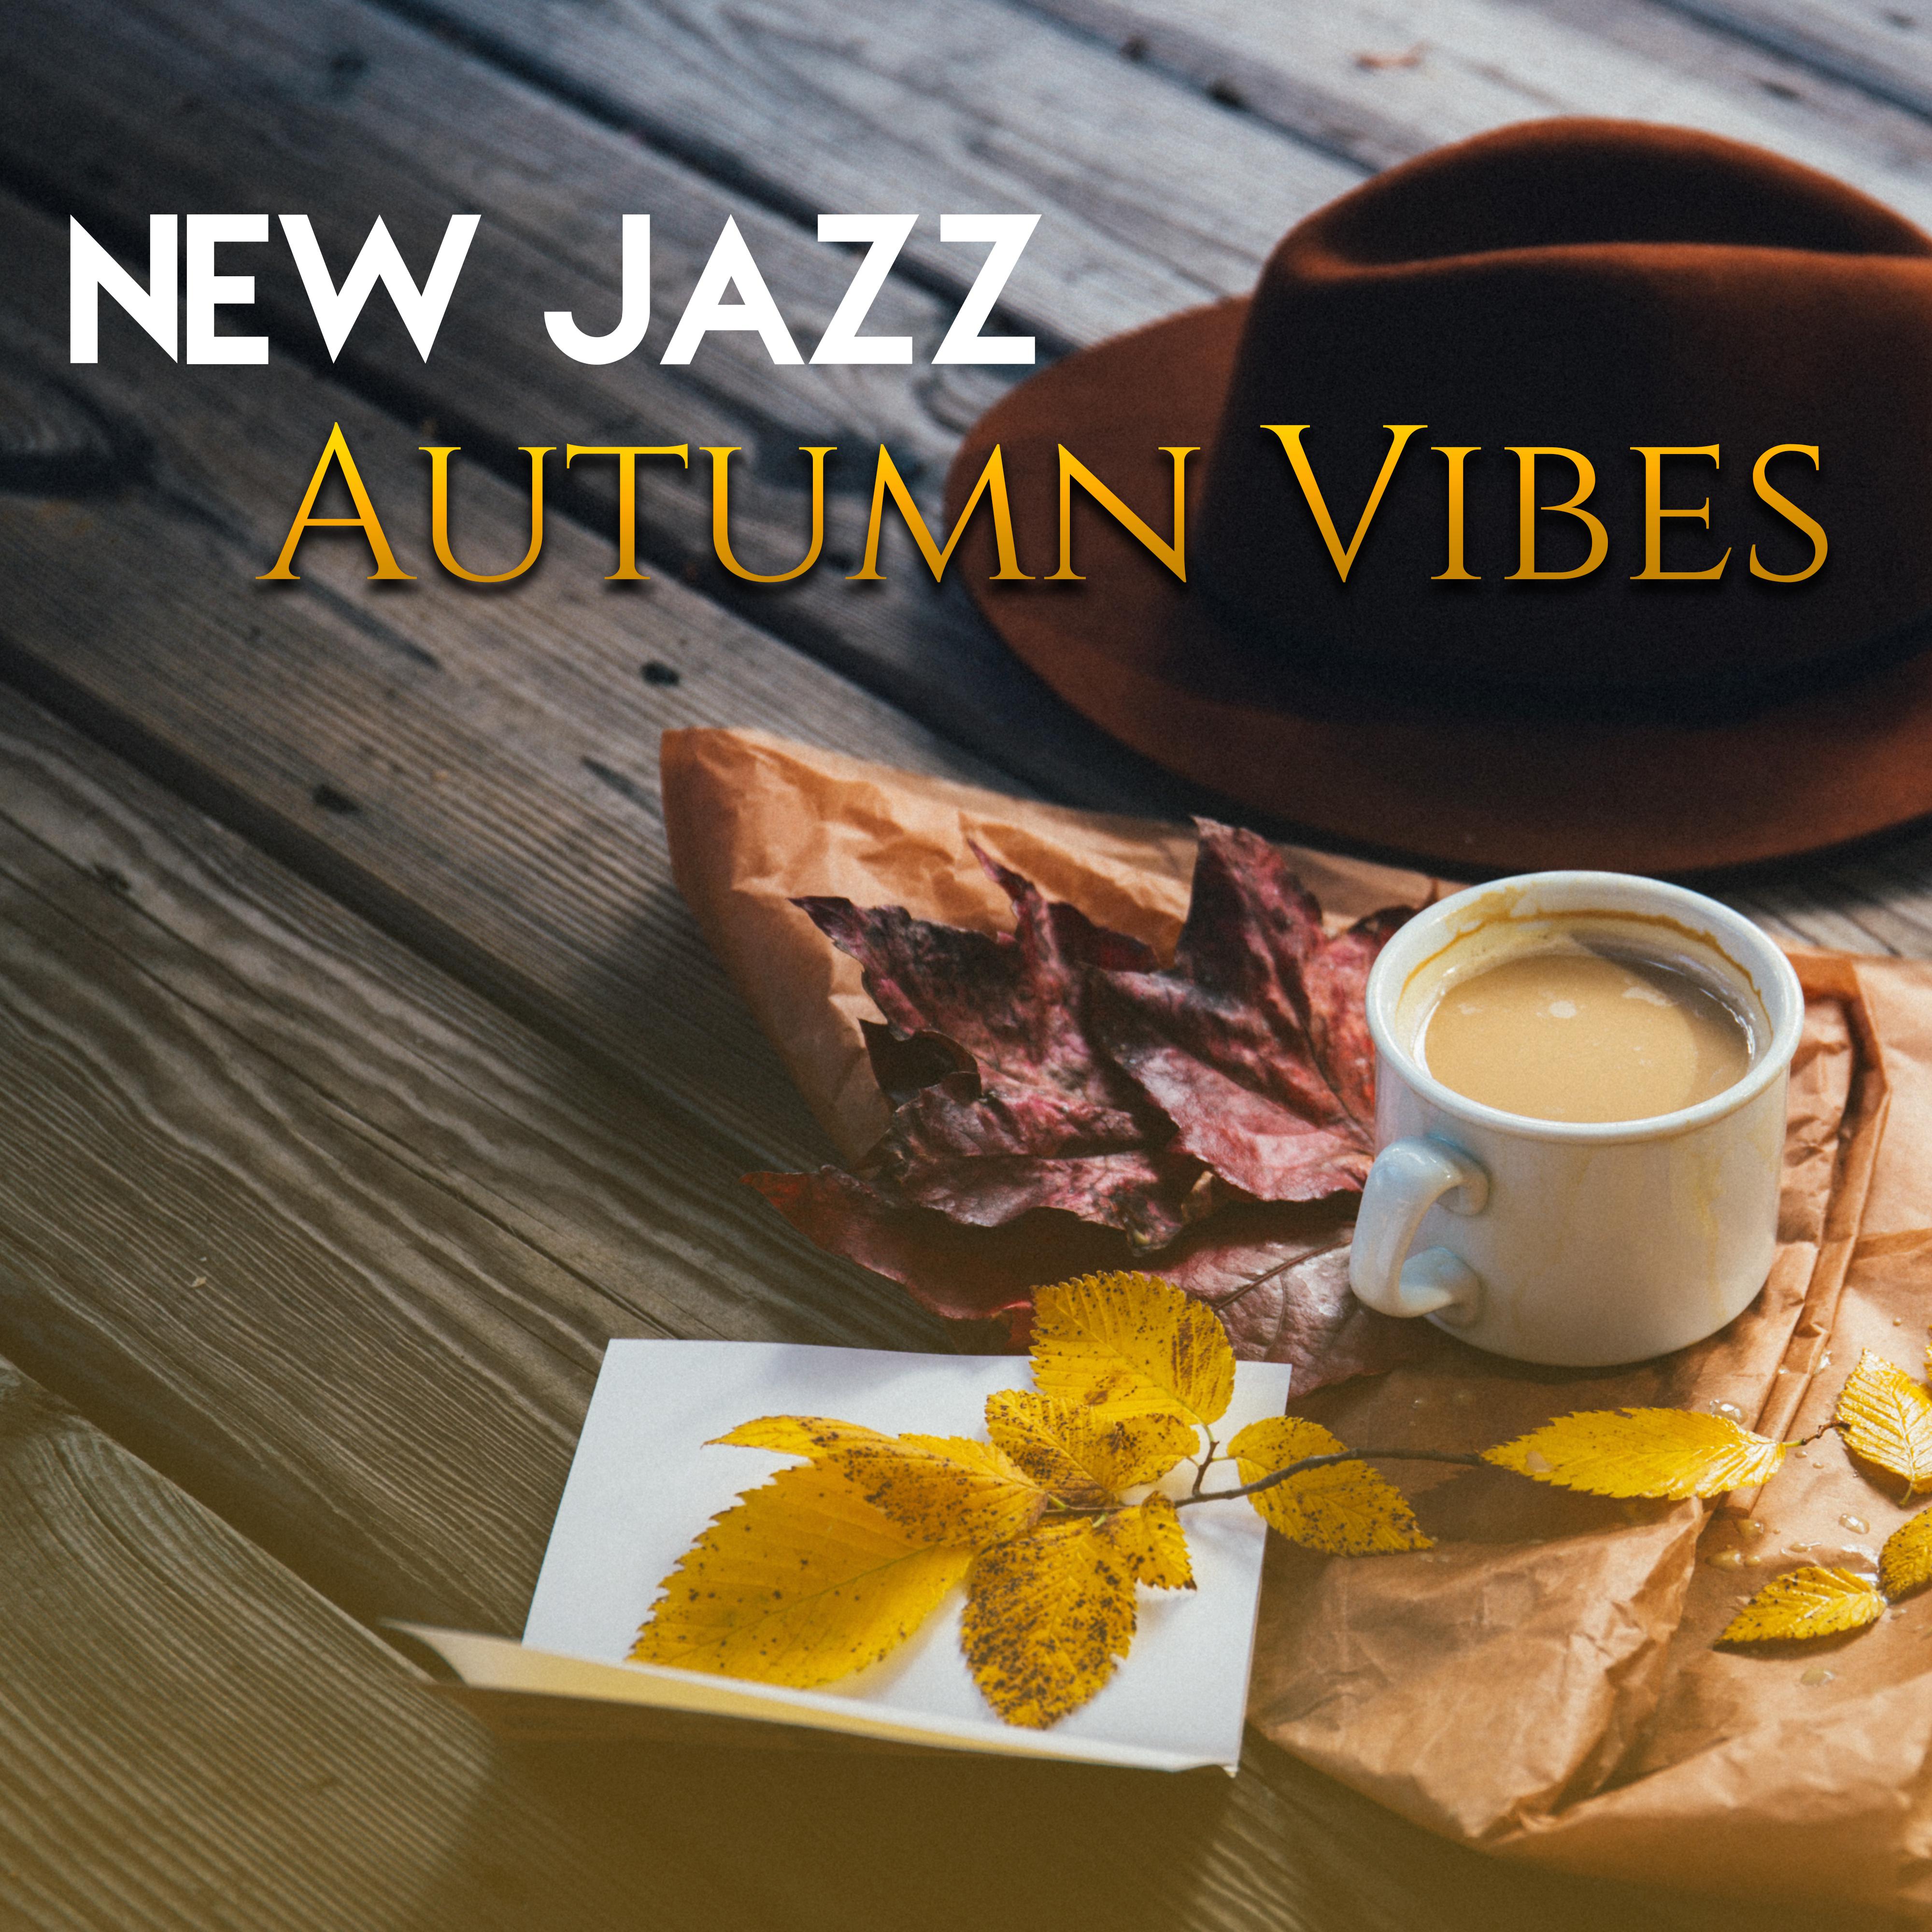 New Jazz Autumn Vibes  - Easy Listening, Jazz 2017, Deep Instrumental Session, Restaurant, Cafe Music